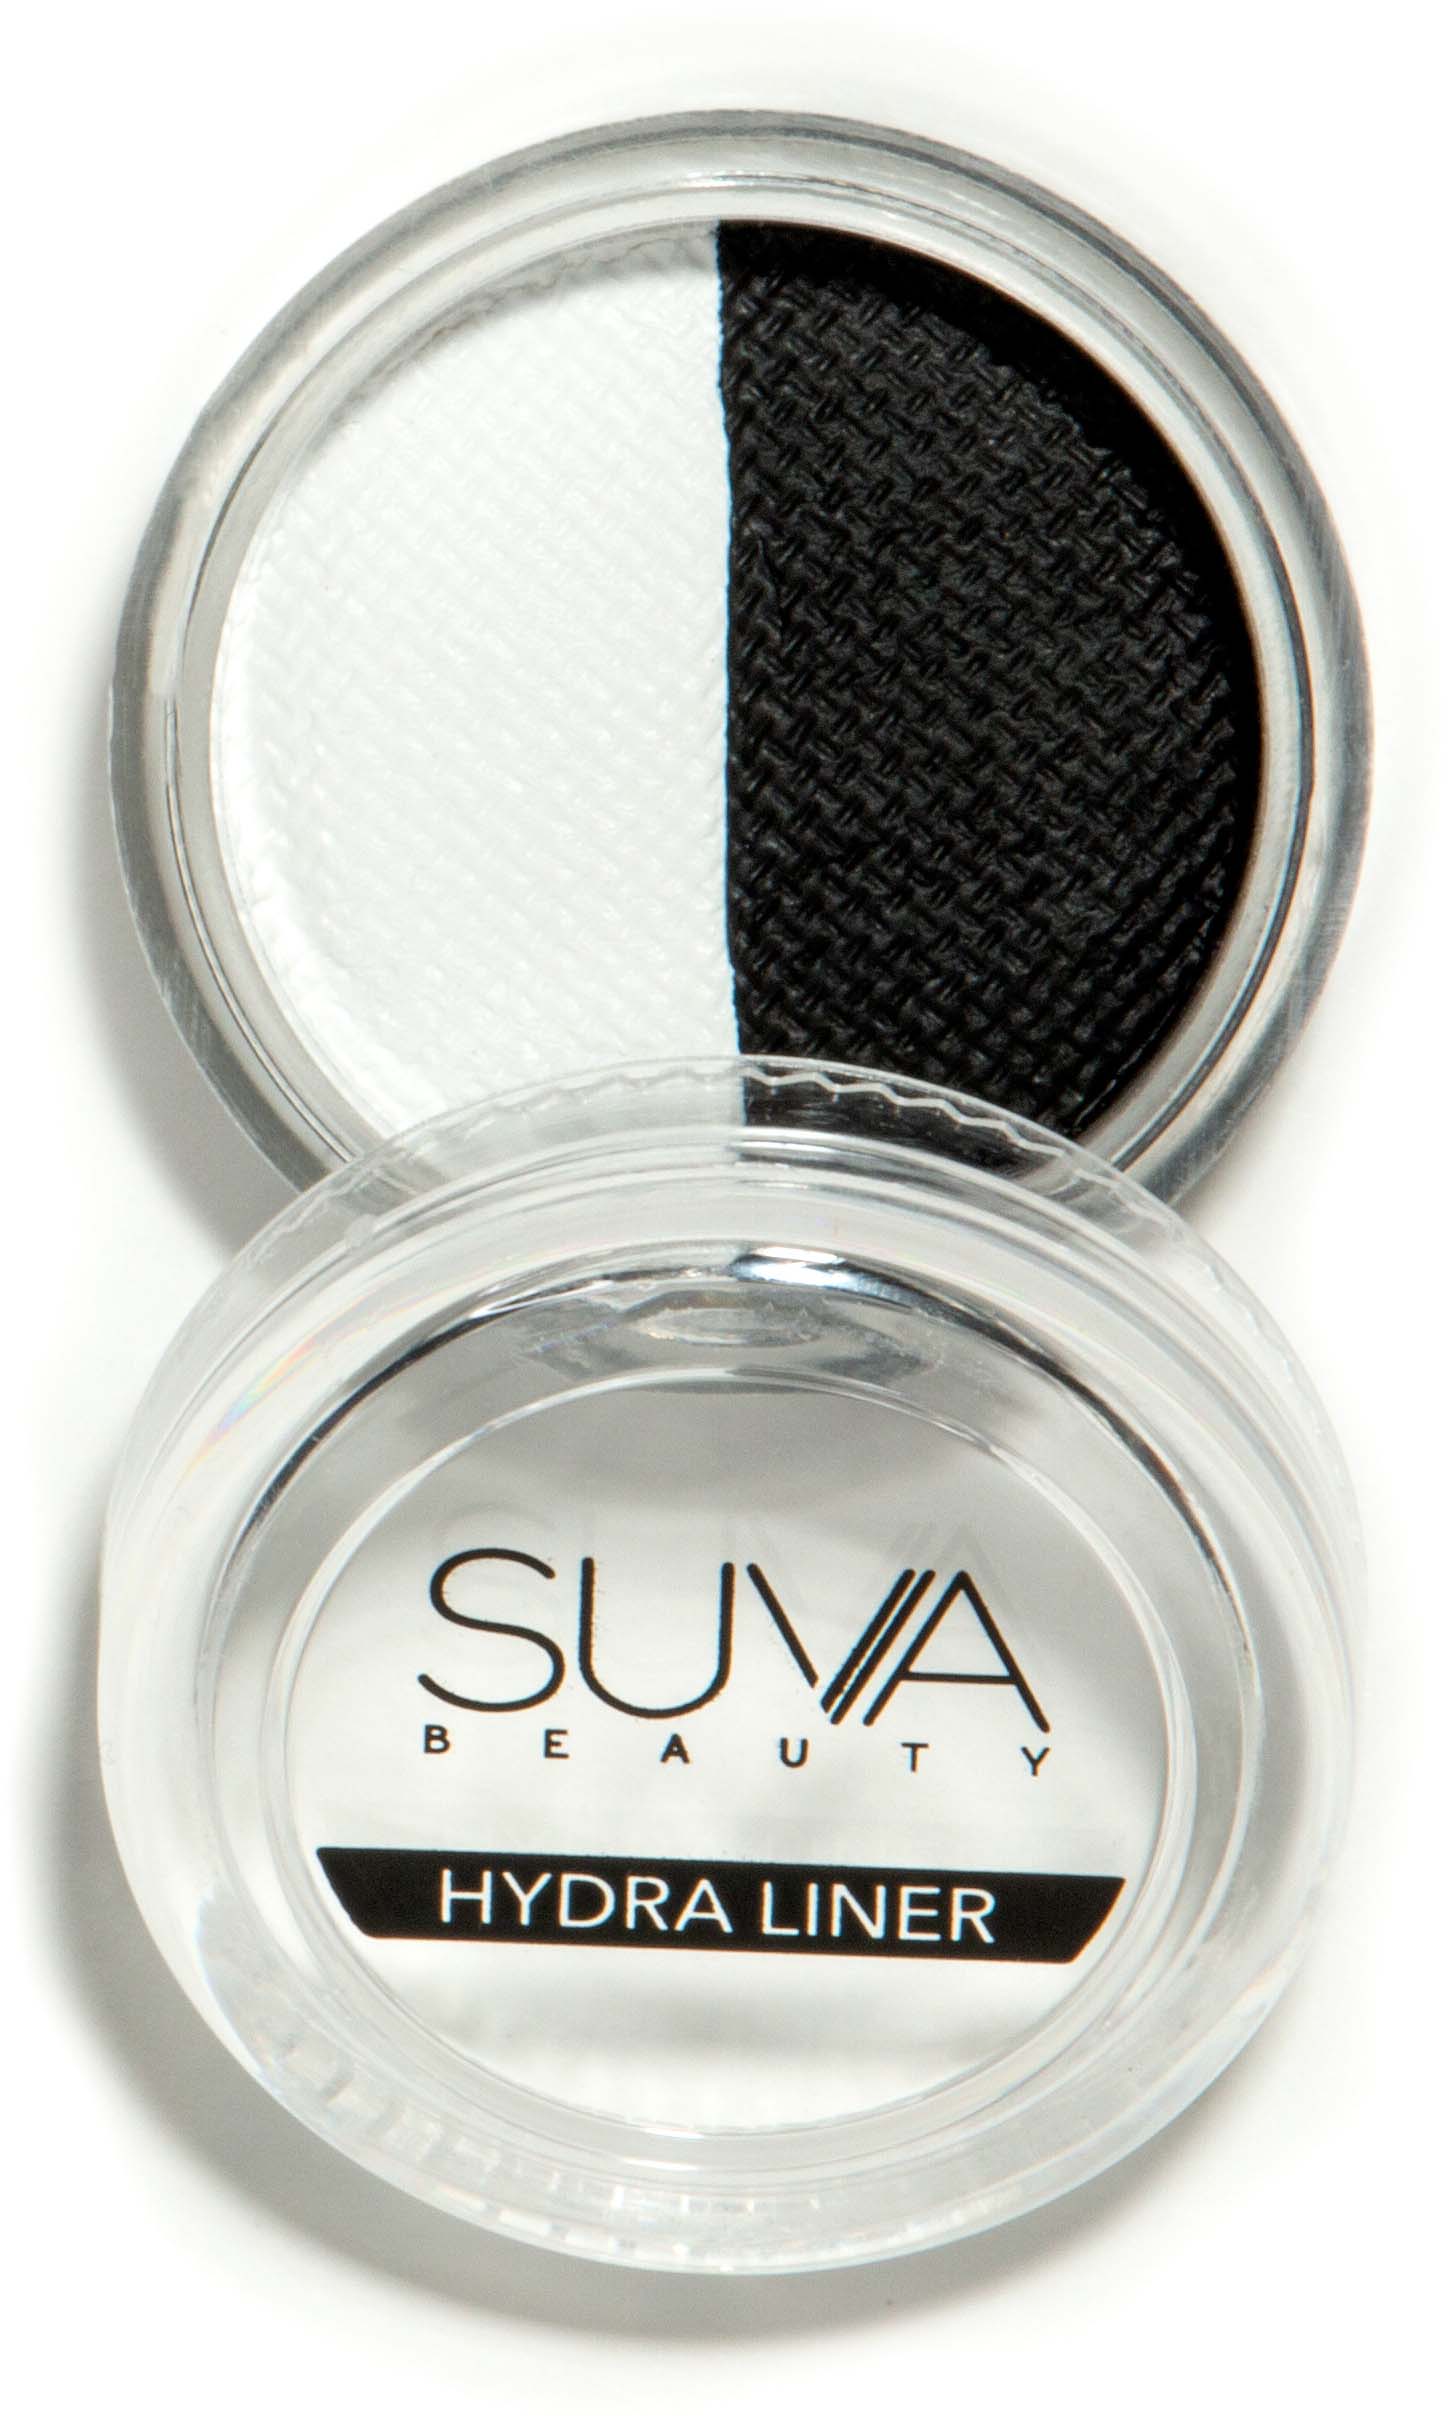 Hydra liner suva beauty aravia professional hydra save conditioner